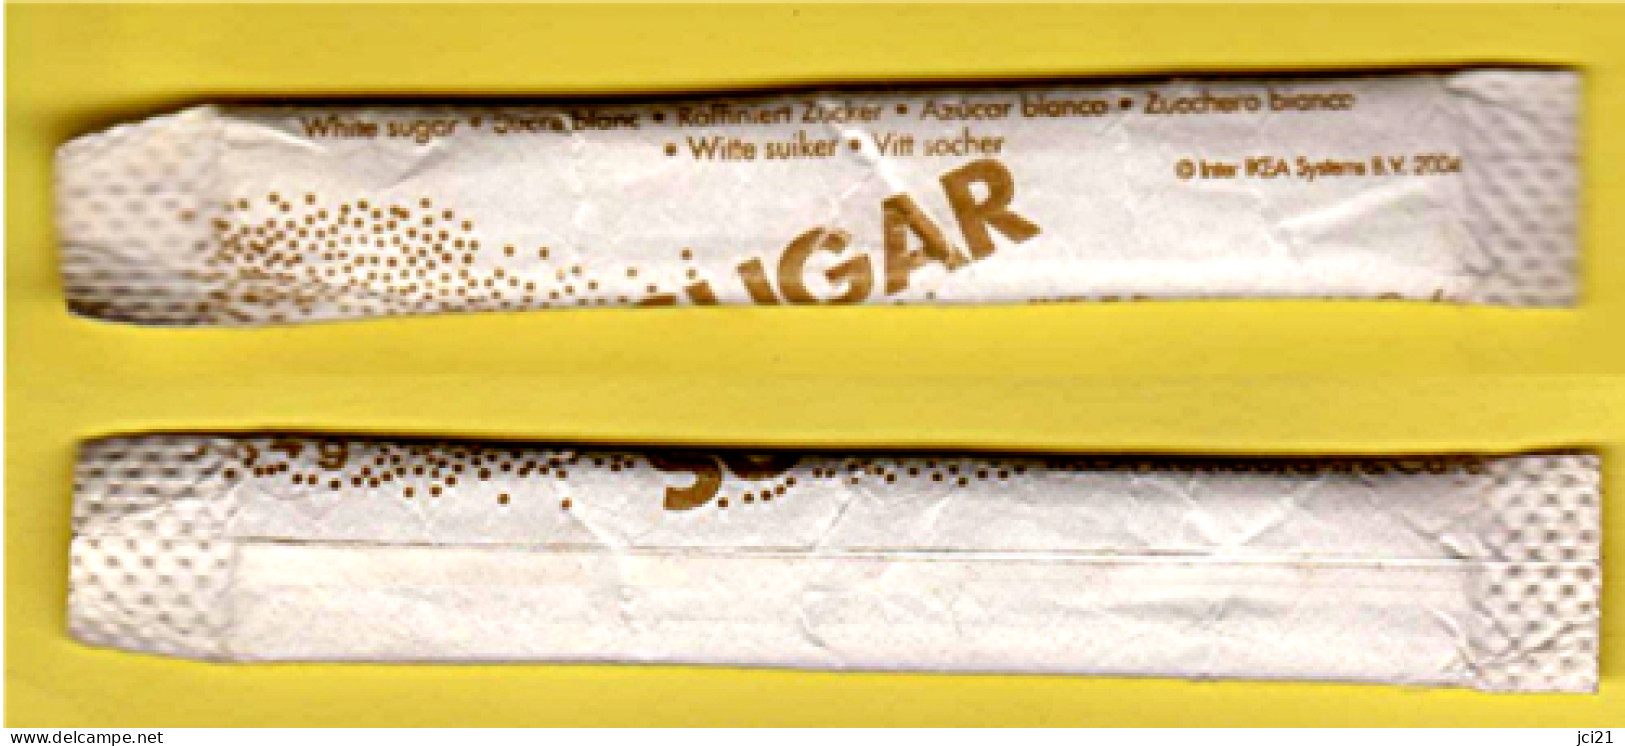 Stick De Sucre " SUGAR - IKEA " [S021]_D352 - Suiker